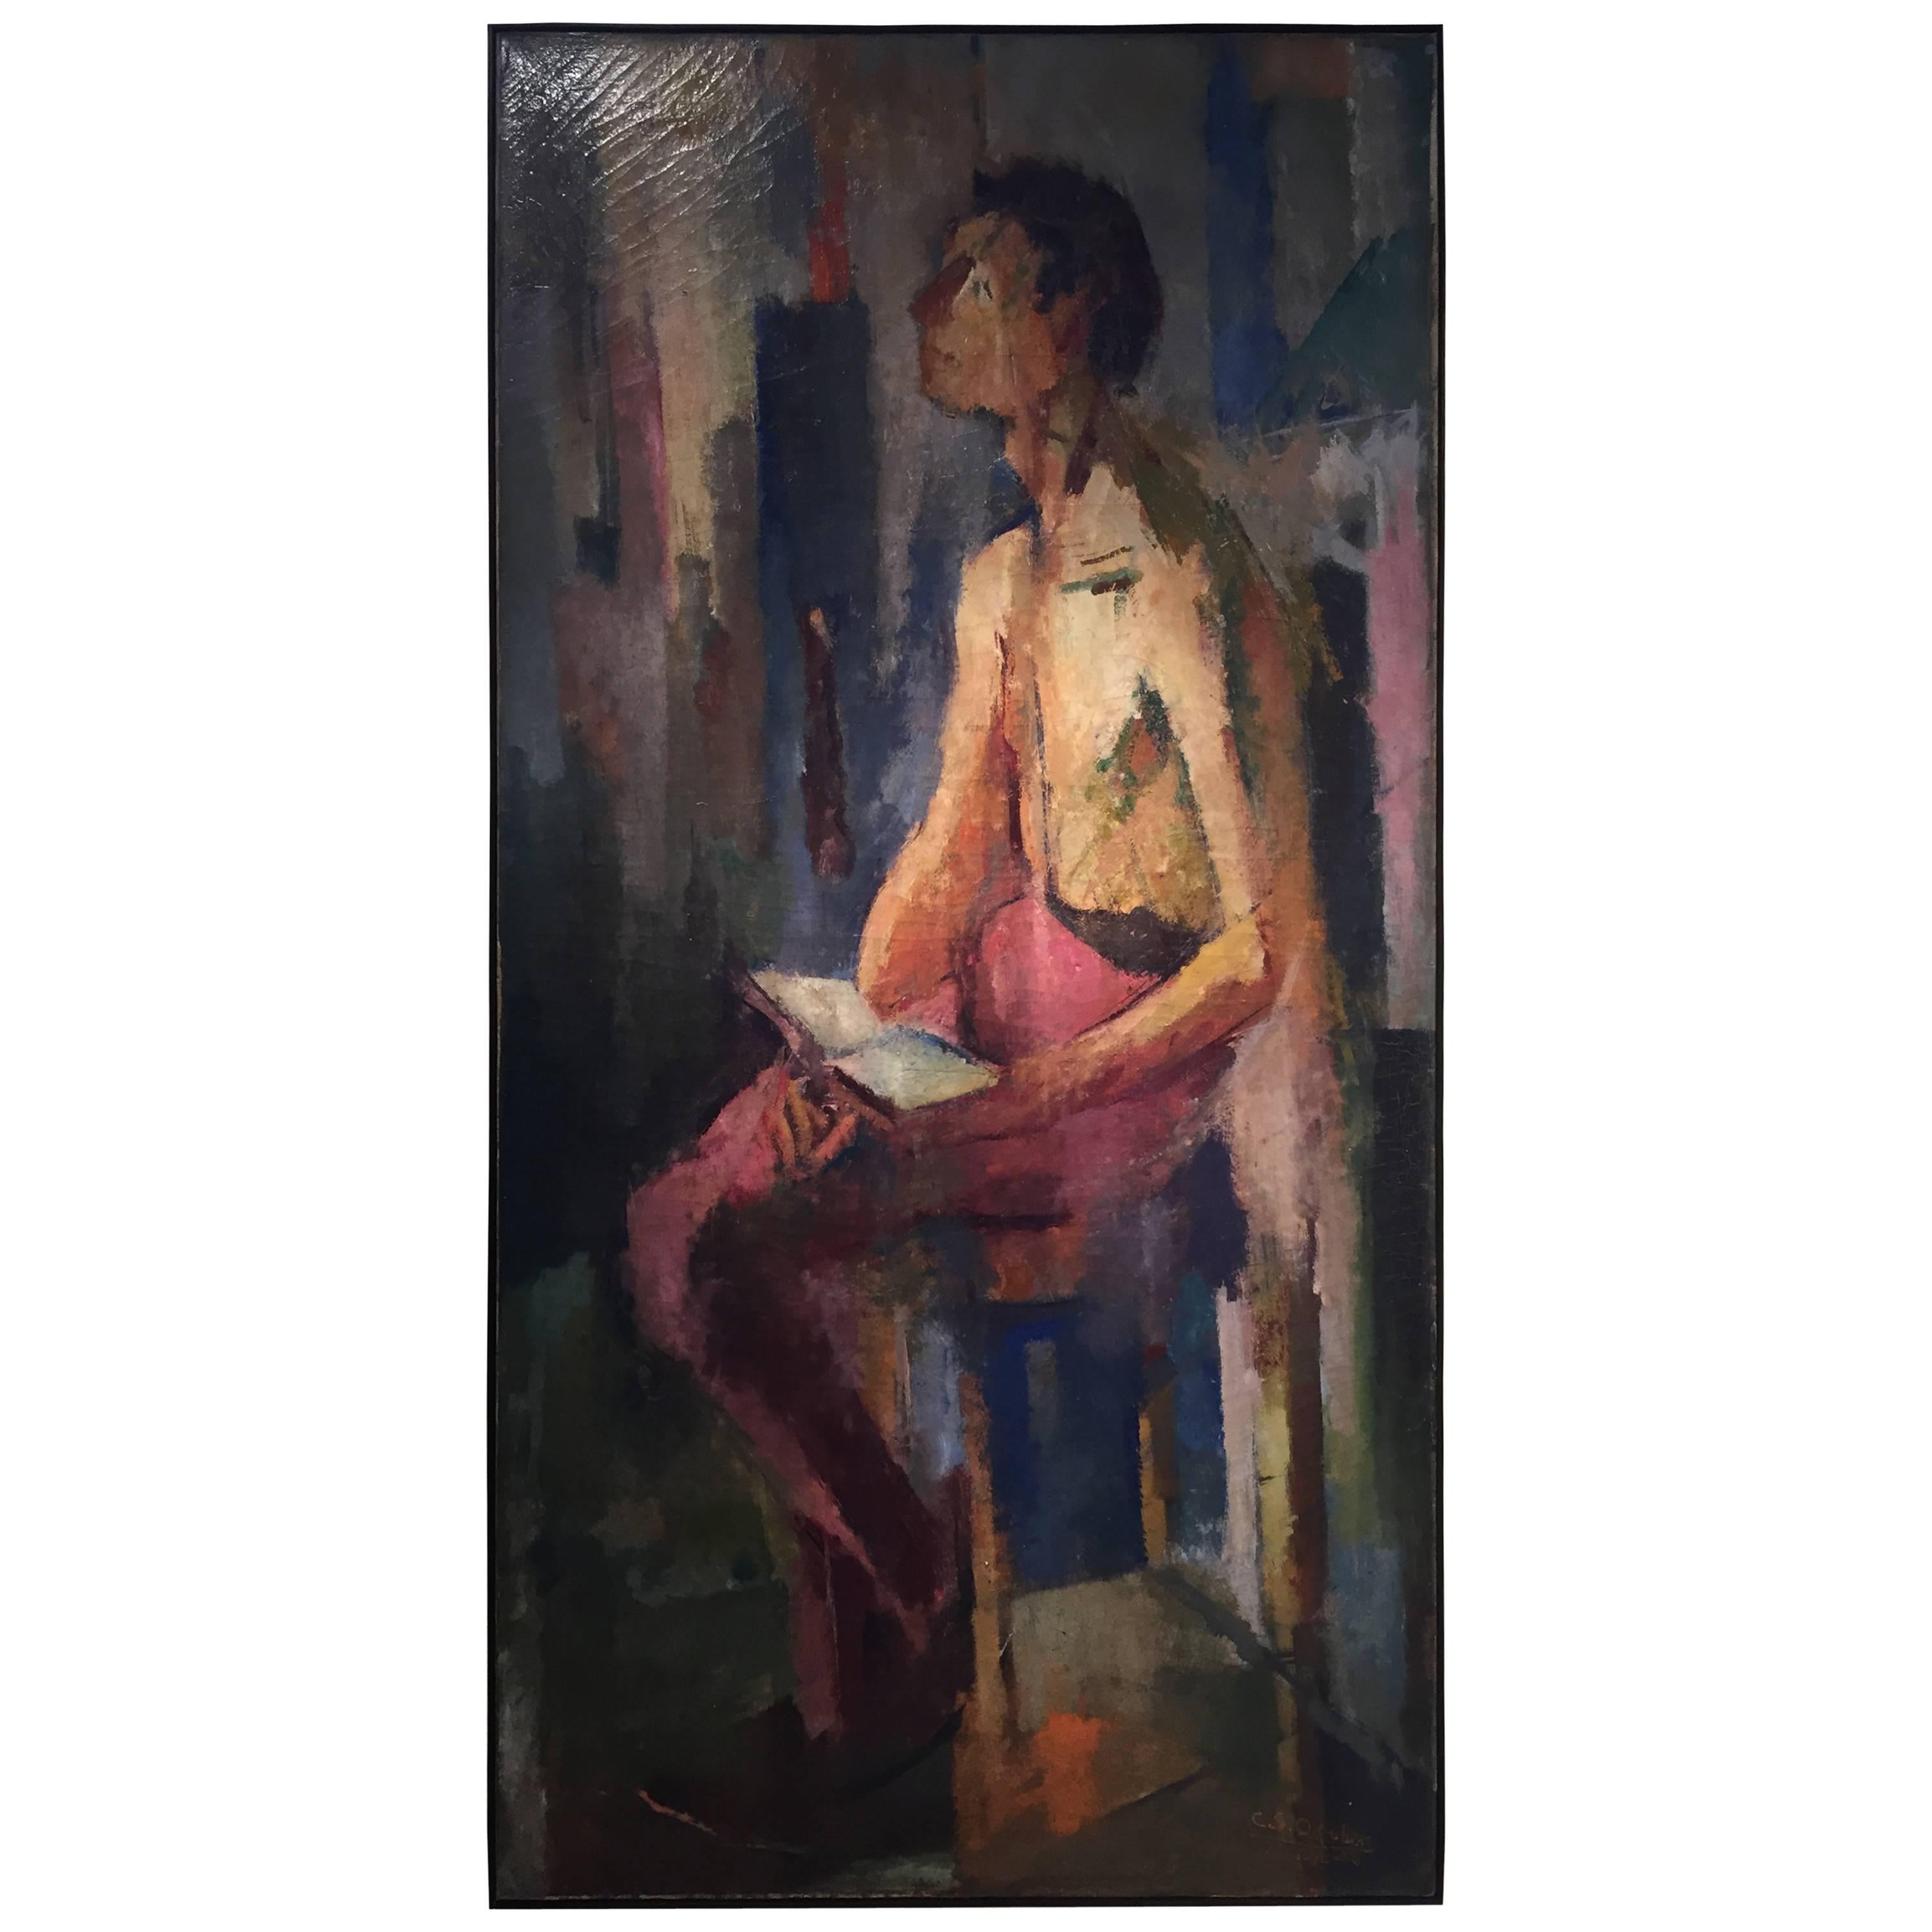 Ciro Oduber Arosemena Painting "Seated Man" For Sale